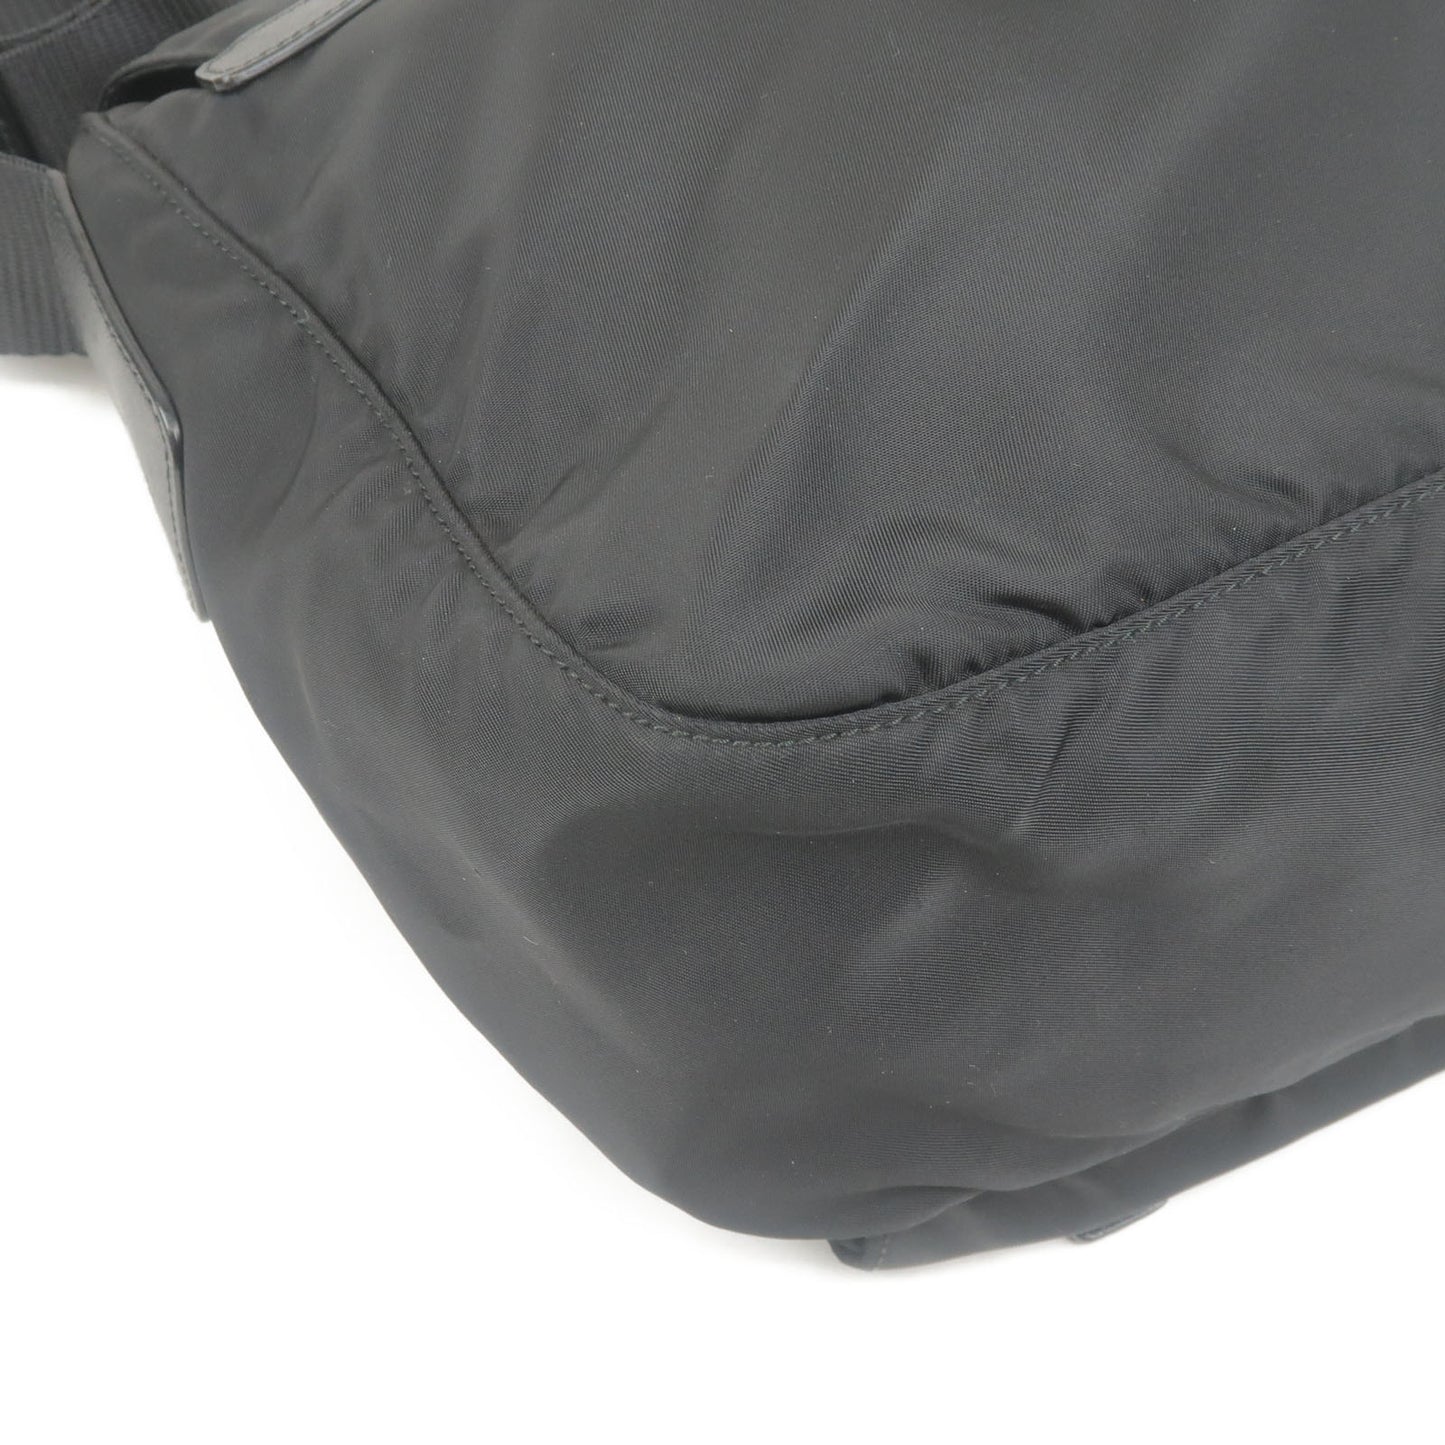 PRADA Nylon Leather Shoulder Bag Purse NERO Black BT0953